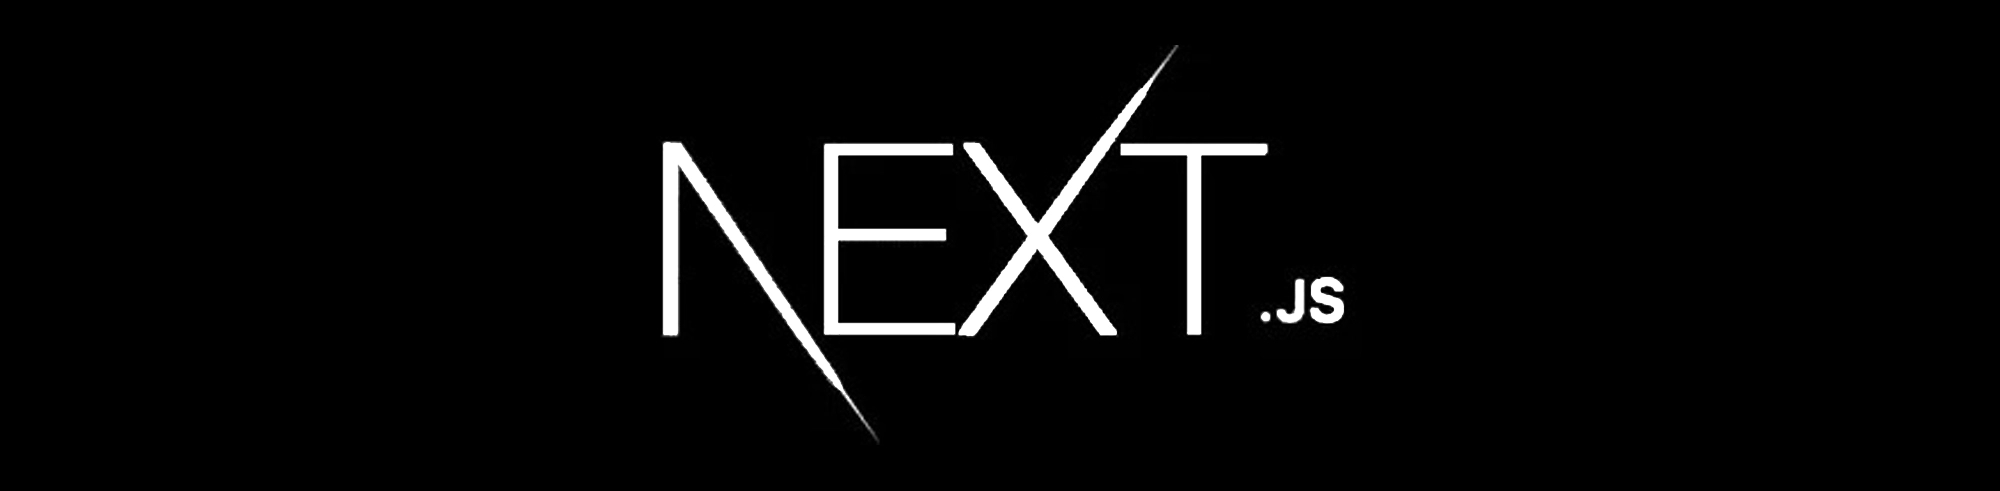 Le logo de Next.js en grand